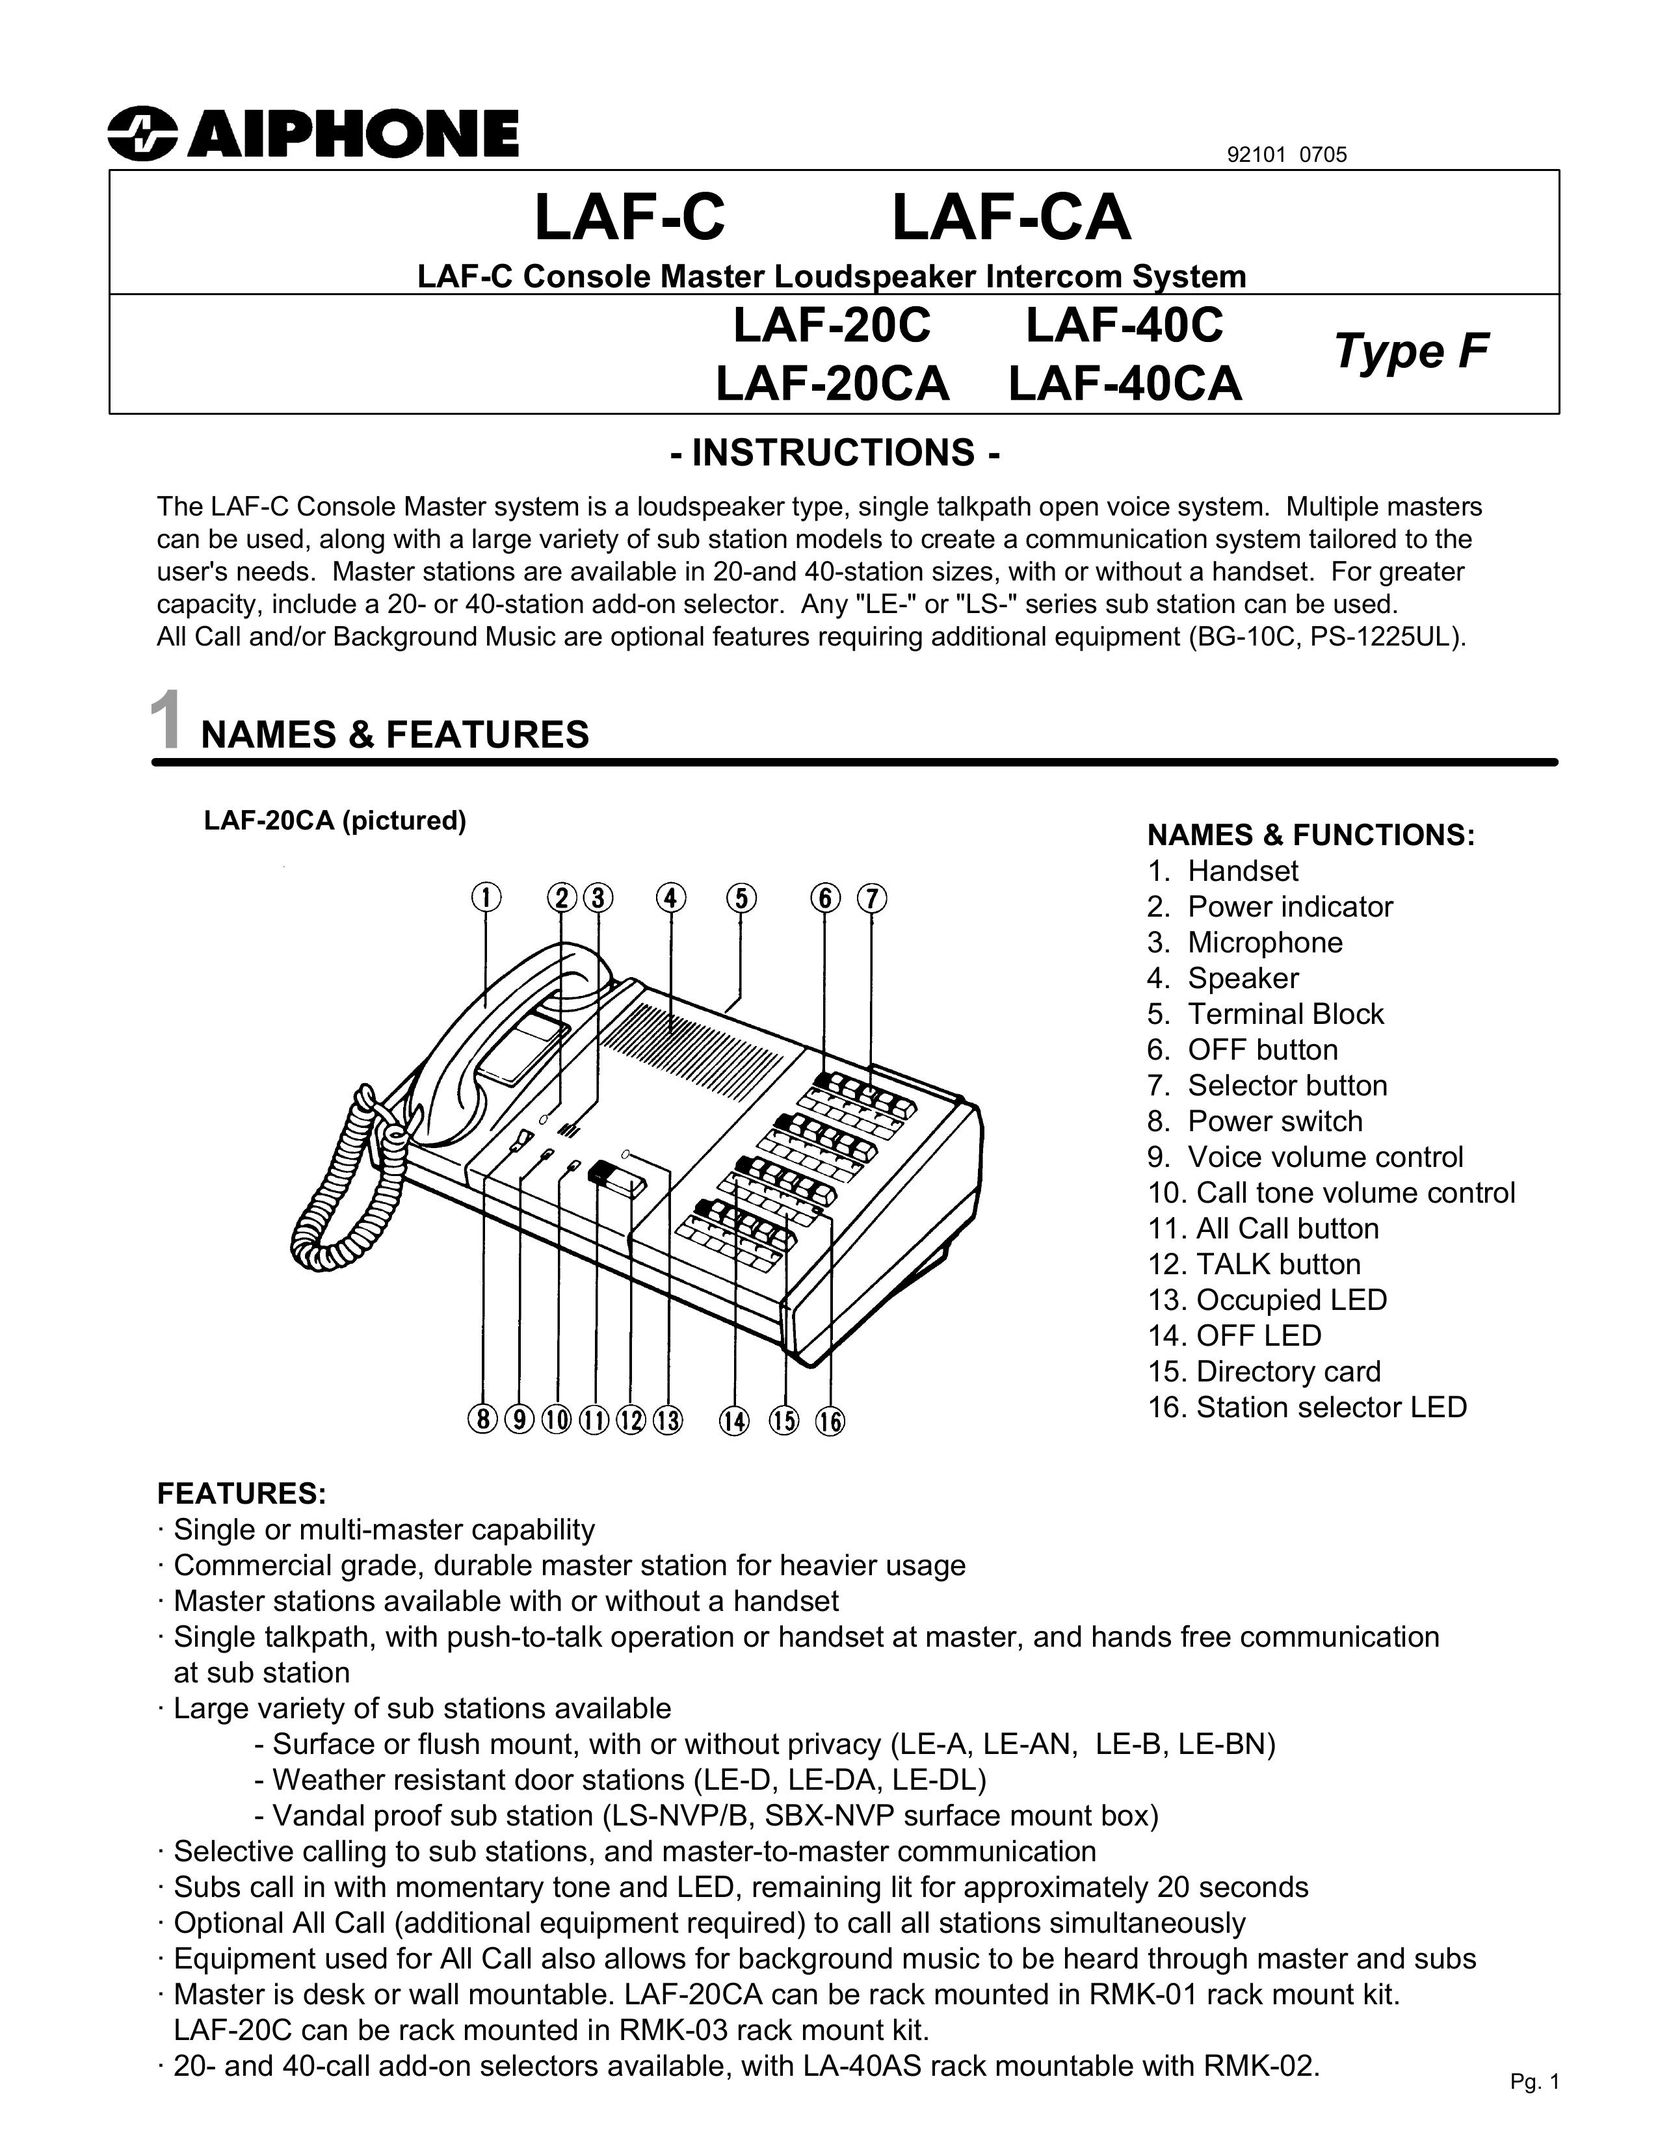 Aiphone LAF-20C Answering Machine User Manual